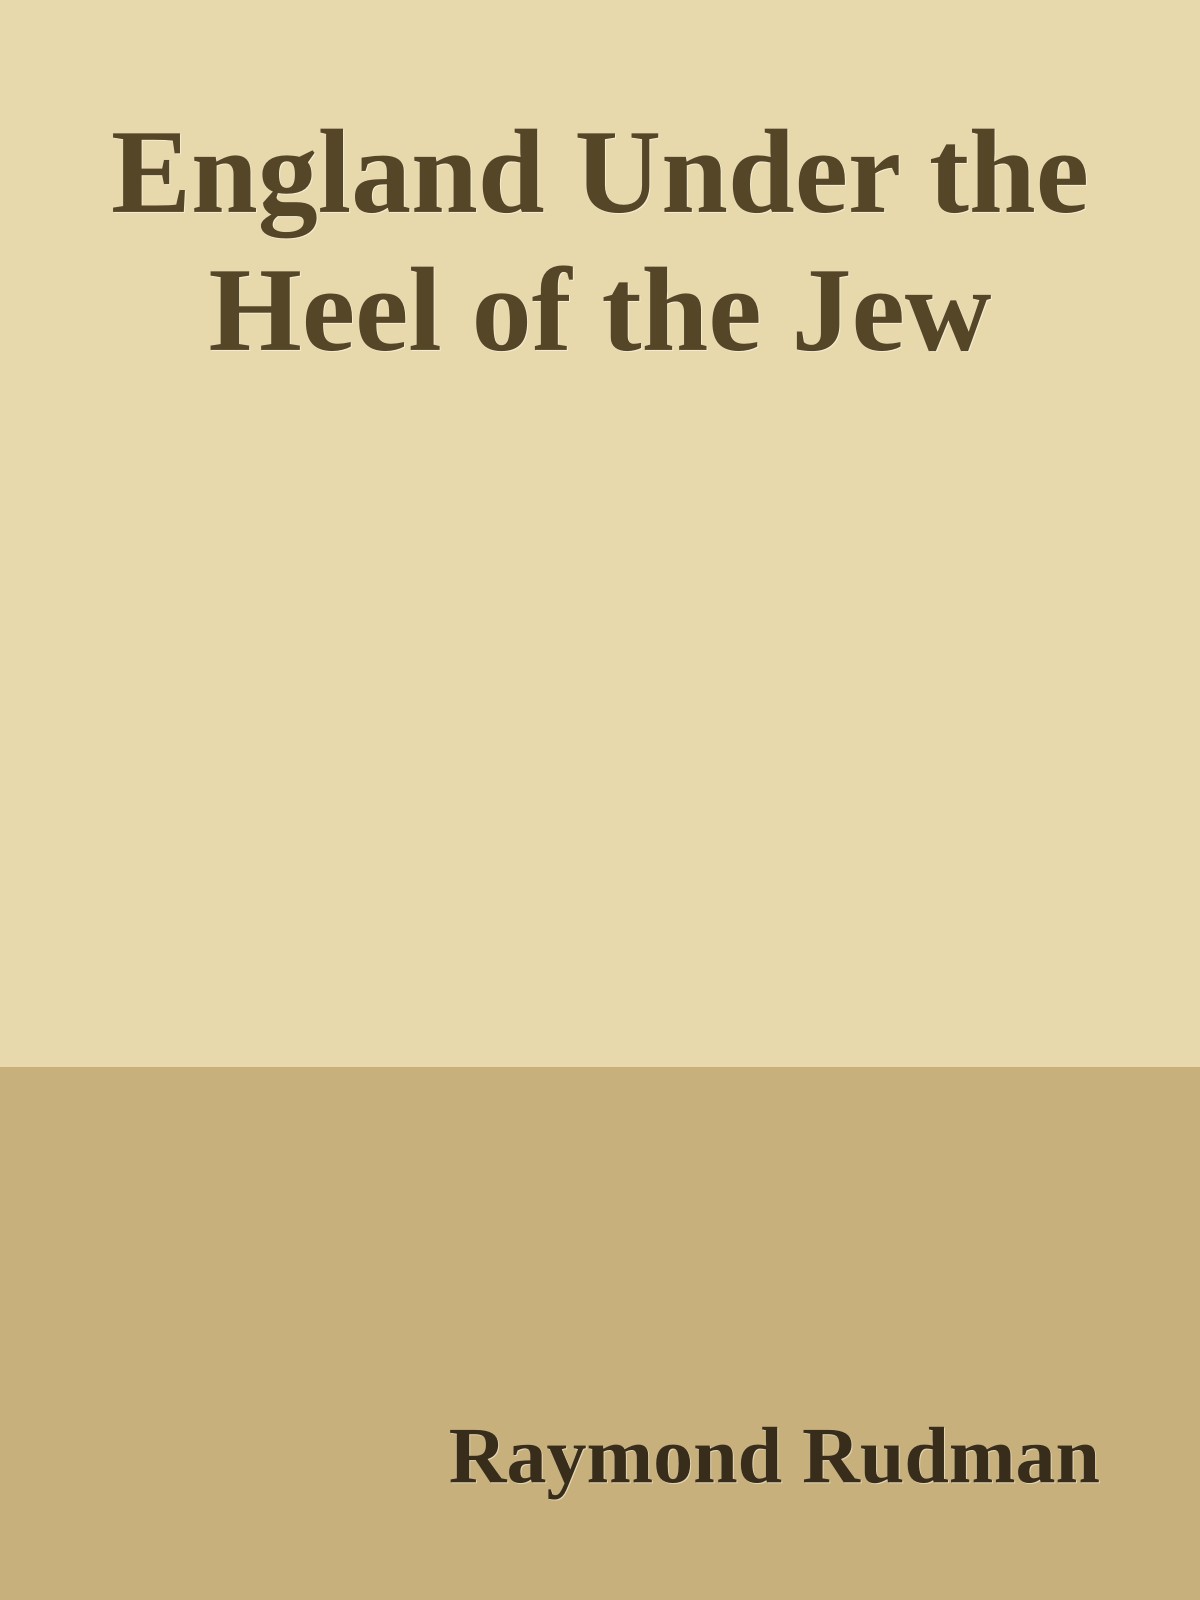 England Under the Heel of the Jew (1918) by Raymond Rudman